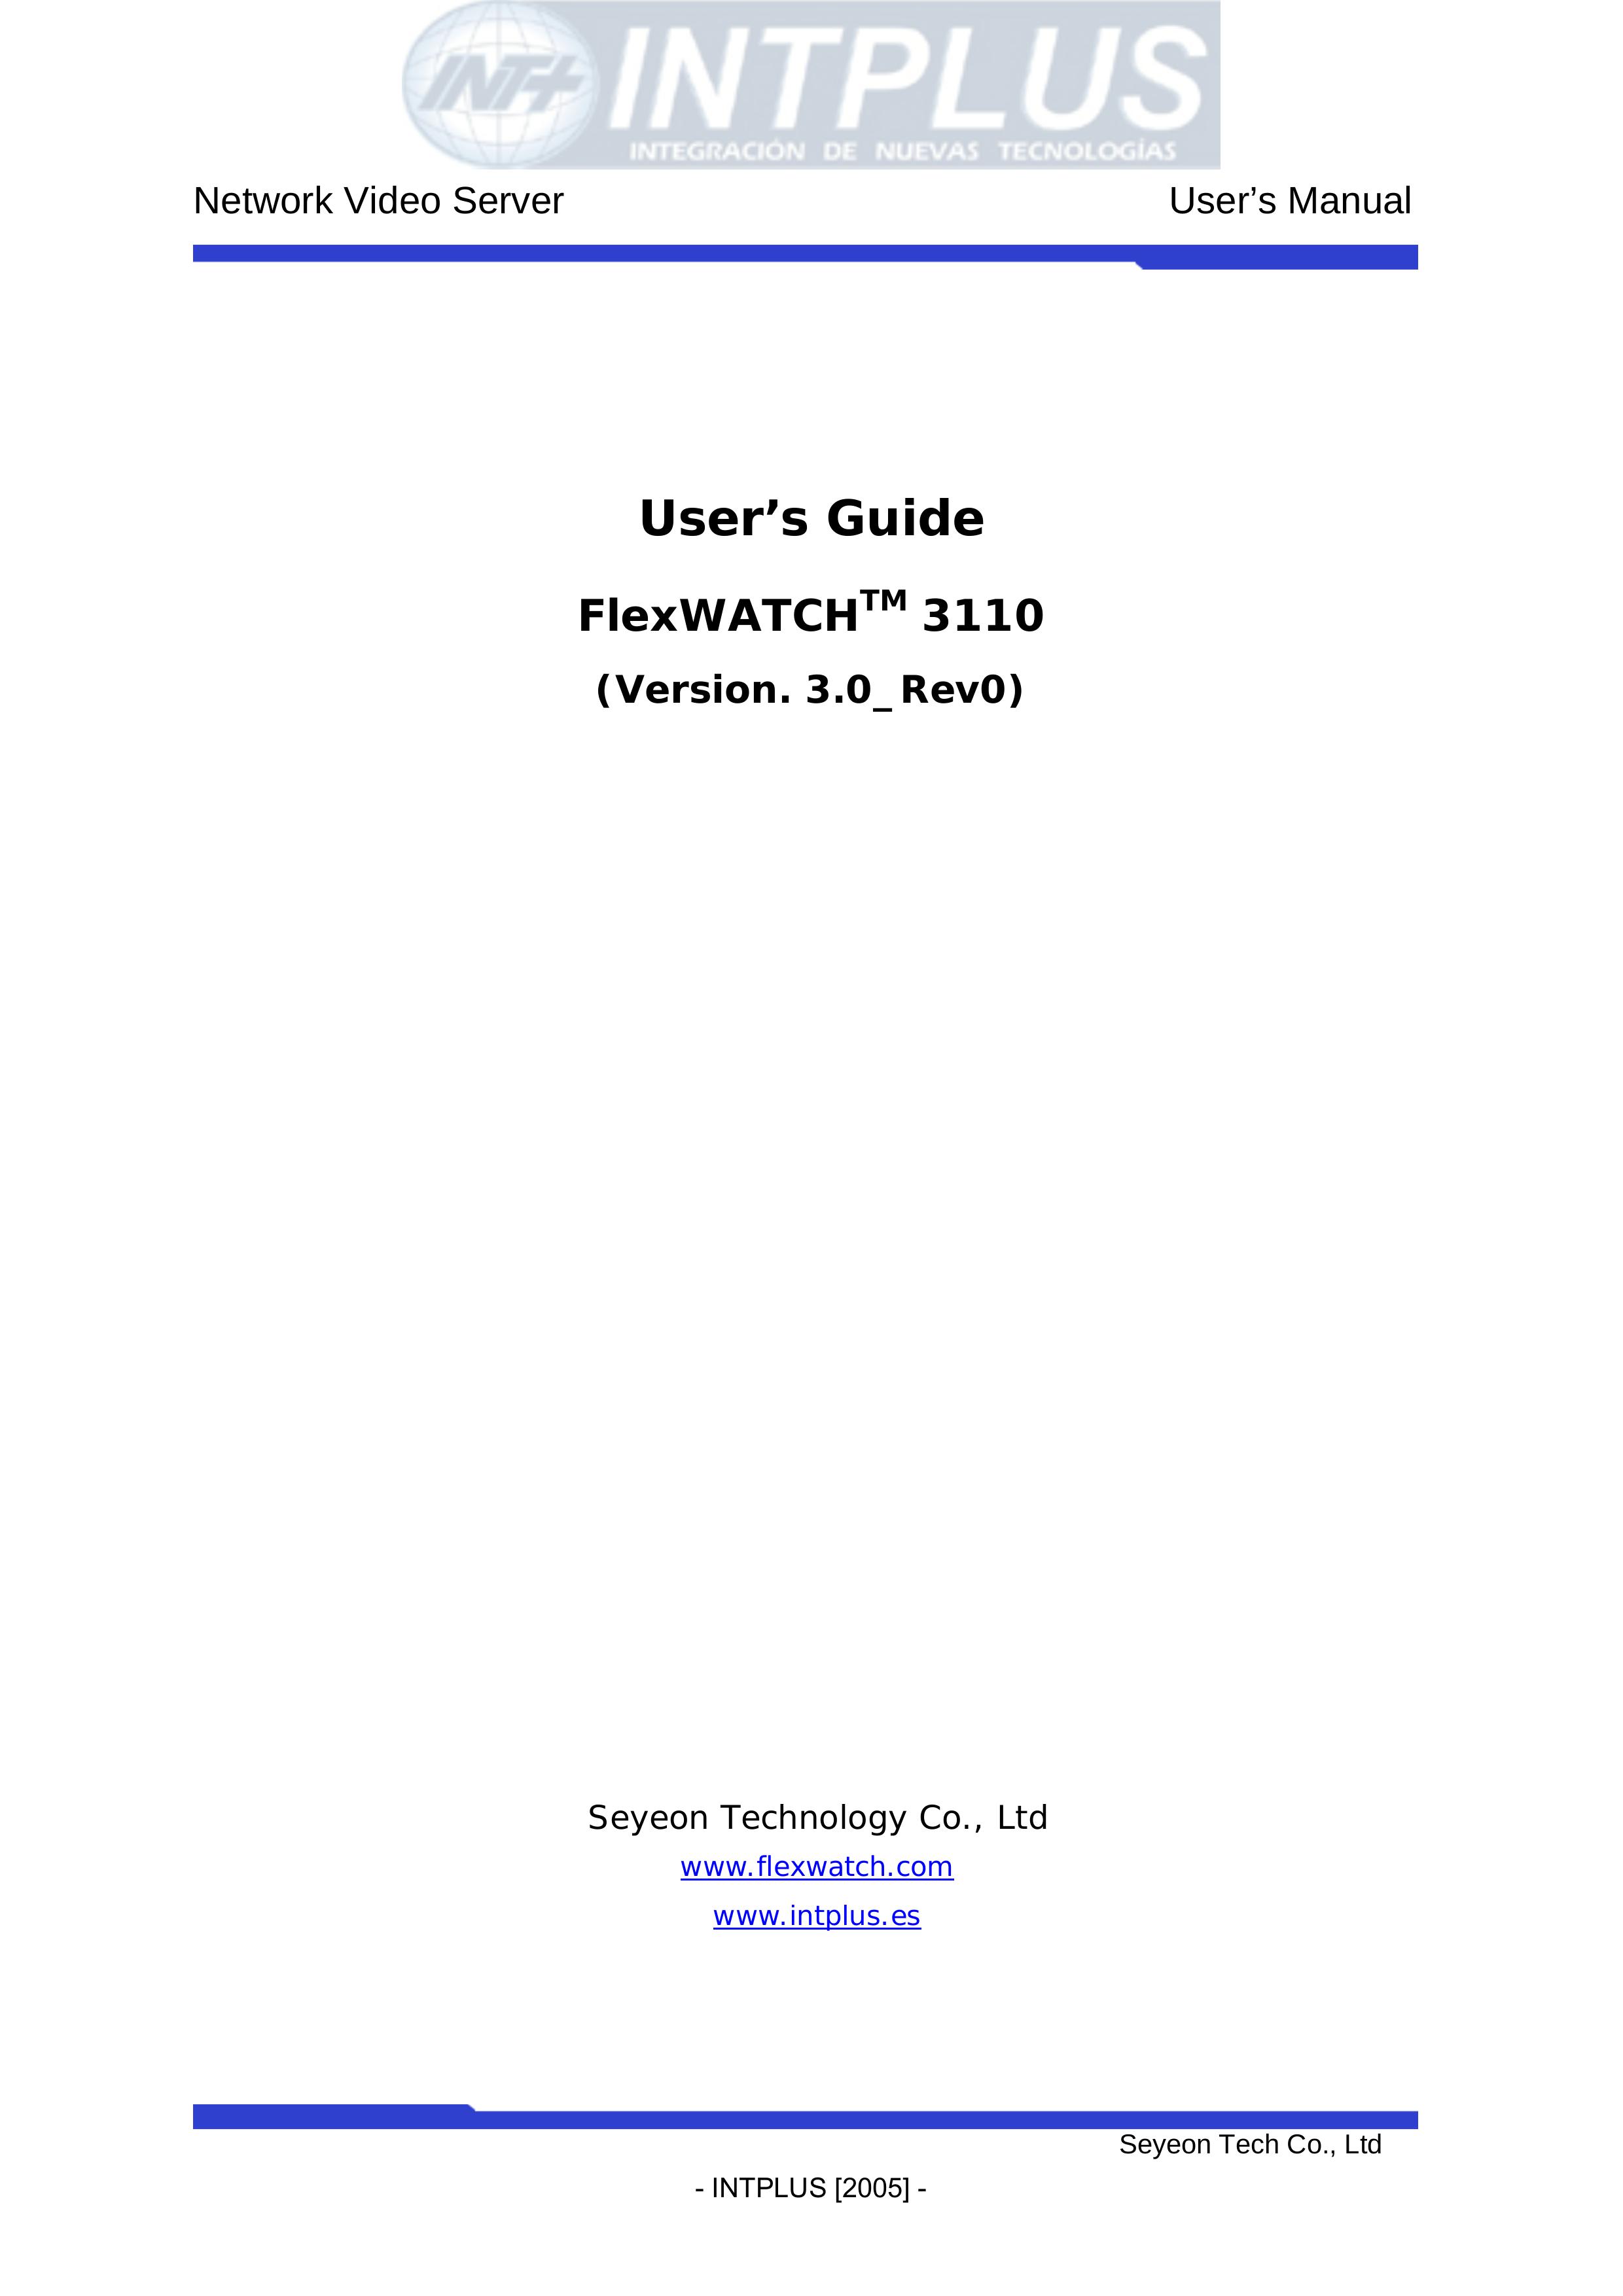 3Com FlexWATCH 3110 Security Camera User Manual